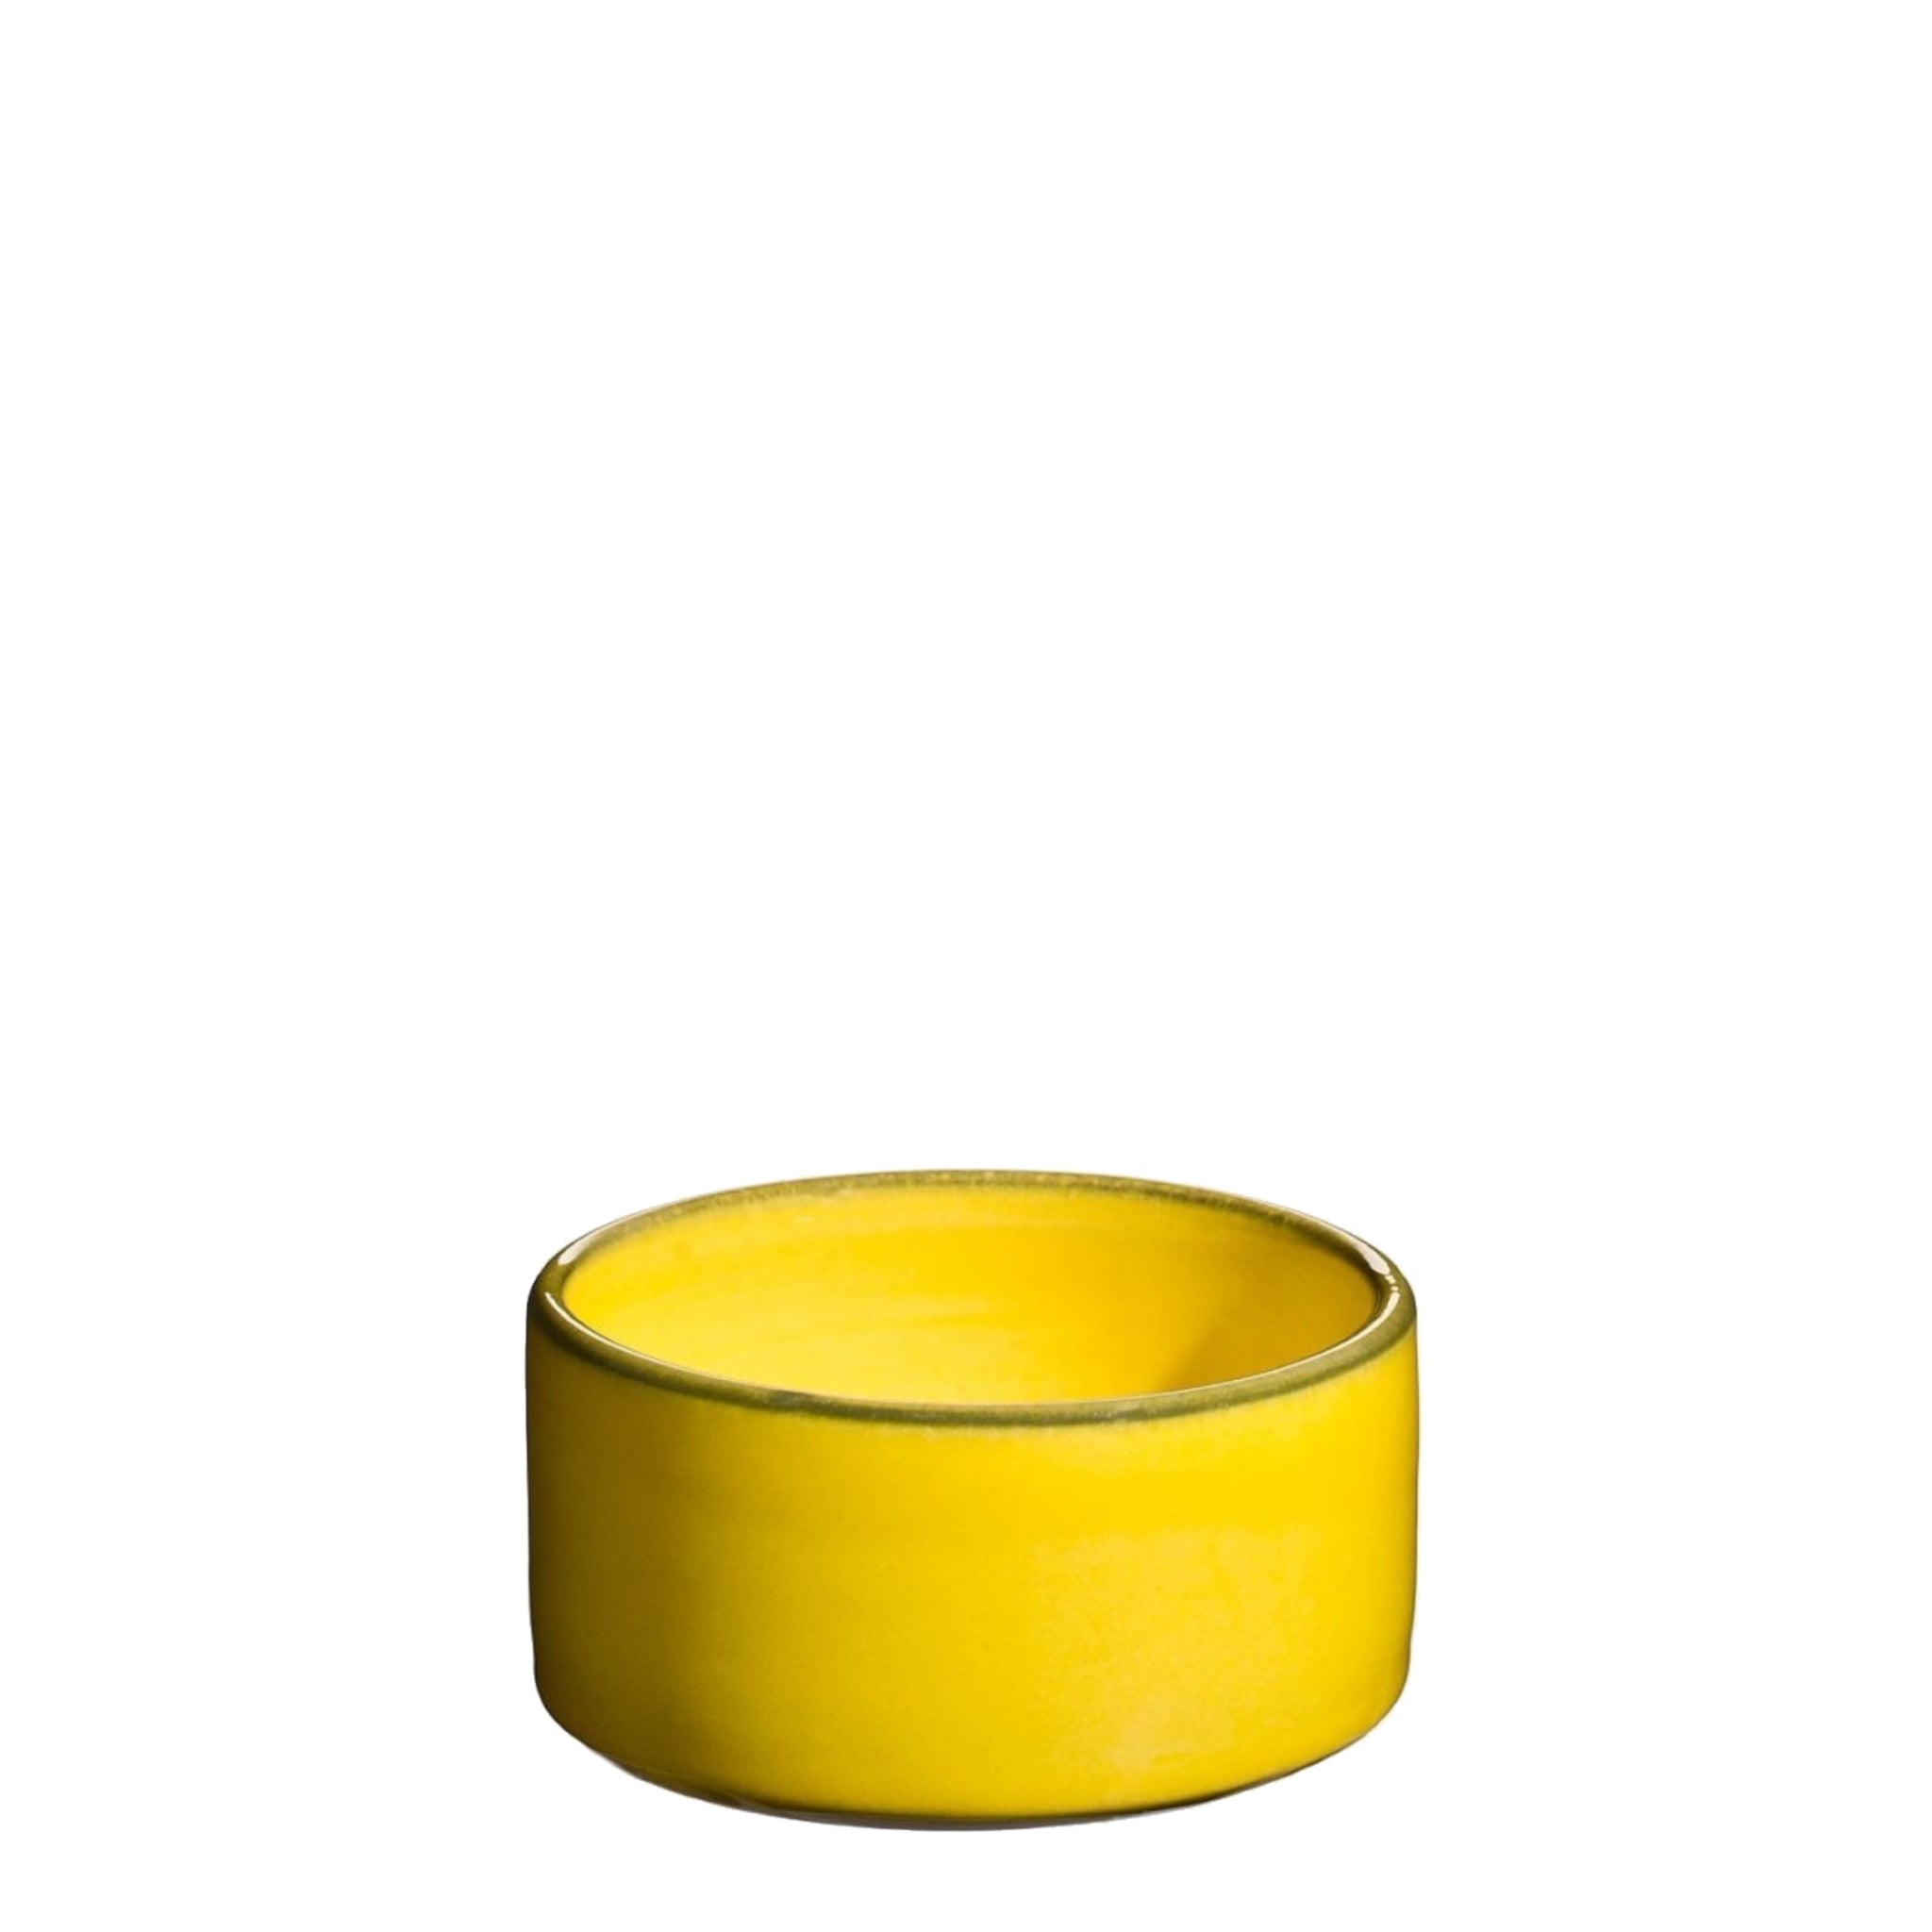 Lille gul håndlavet keramik skål ramekin, Atelier Bernex fra Oliviers & Co